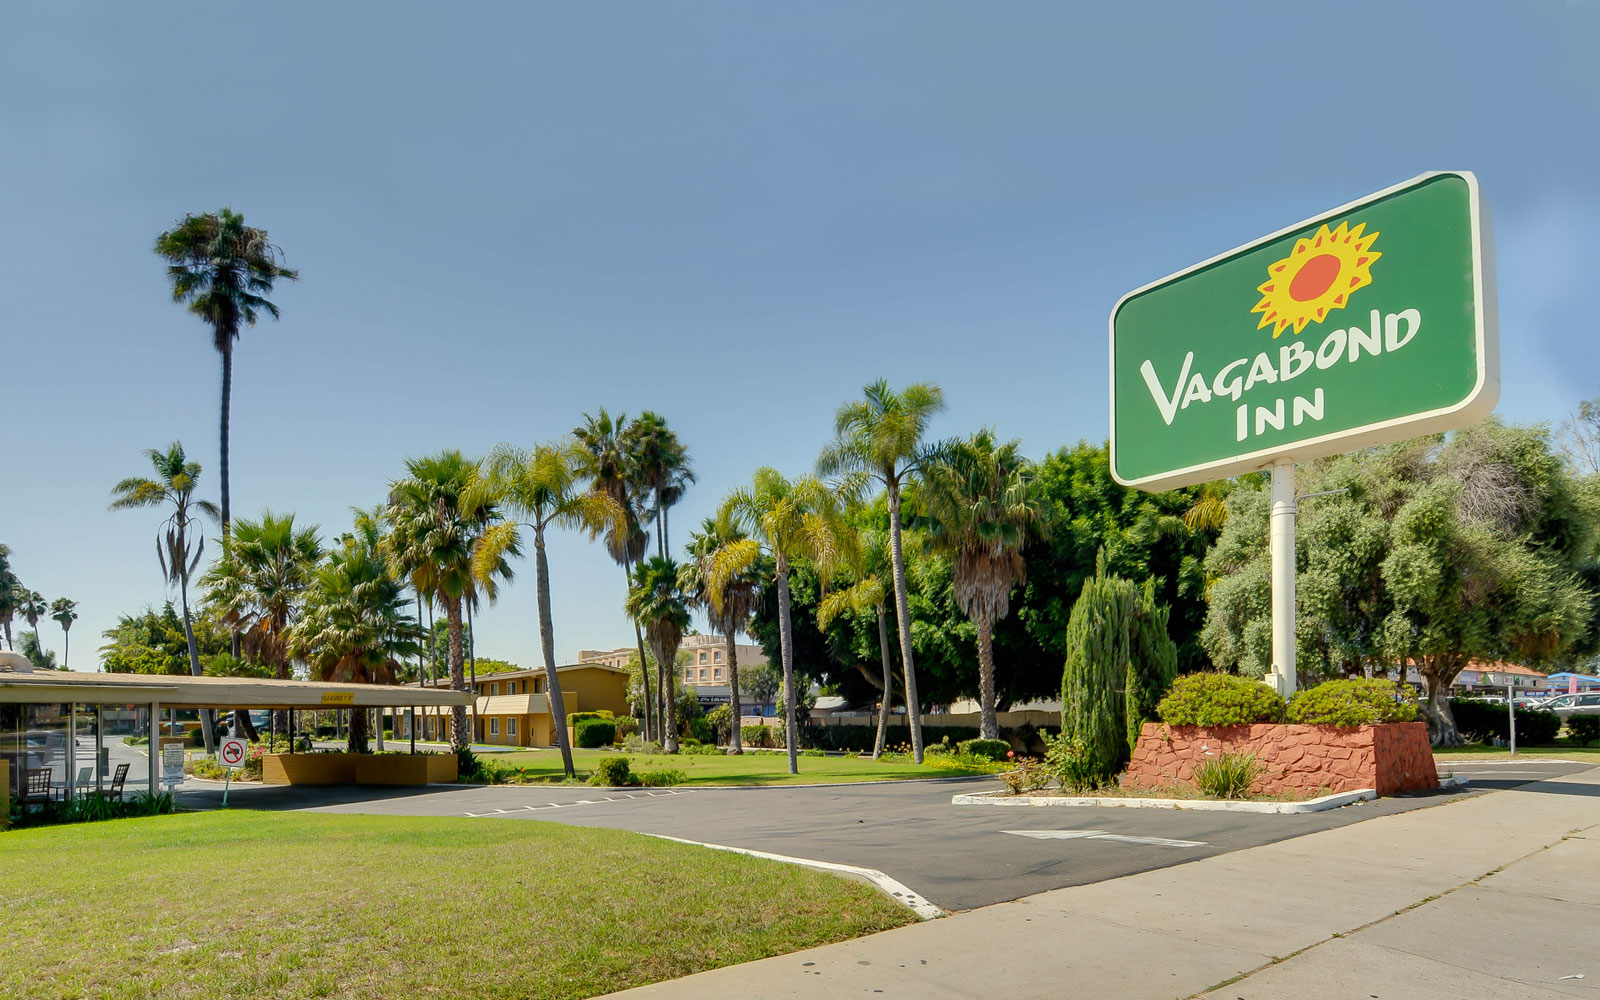 Our West Coast Destinations - Vagabond Inn Hotels